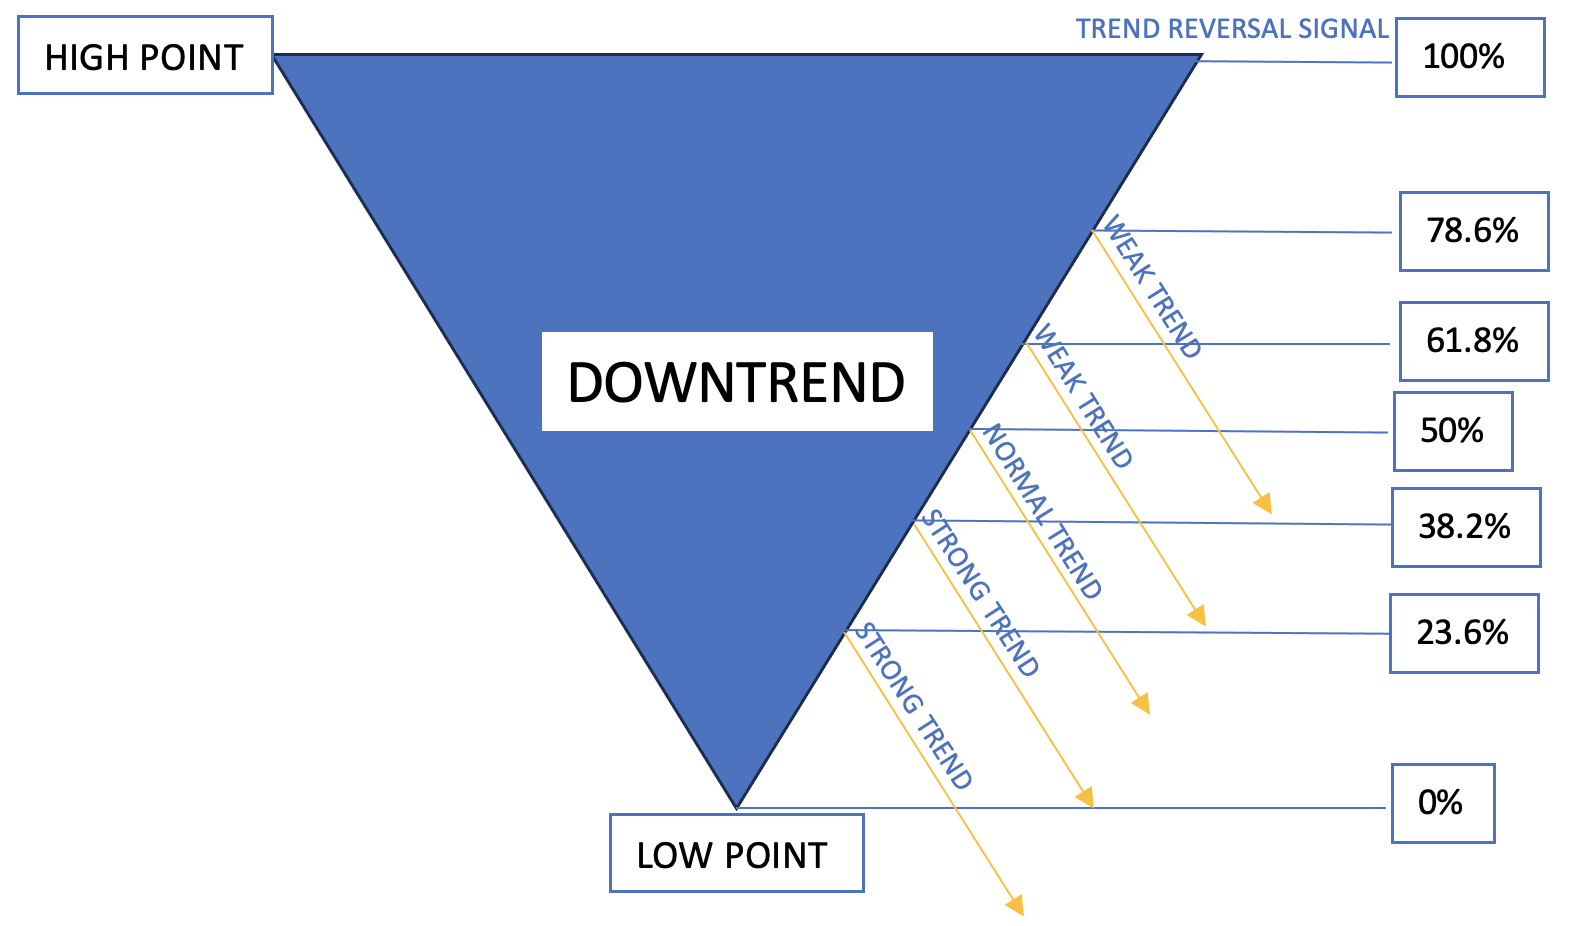 Fibonacci retracement levels in down trend market movements